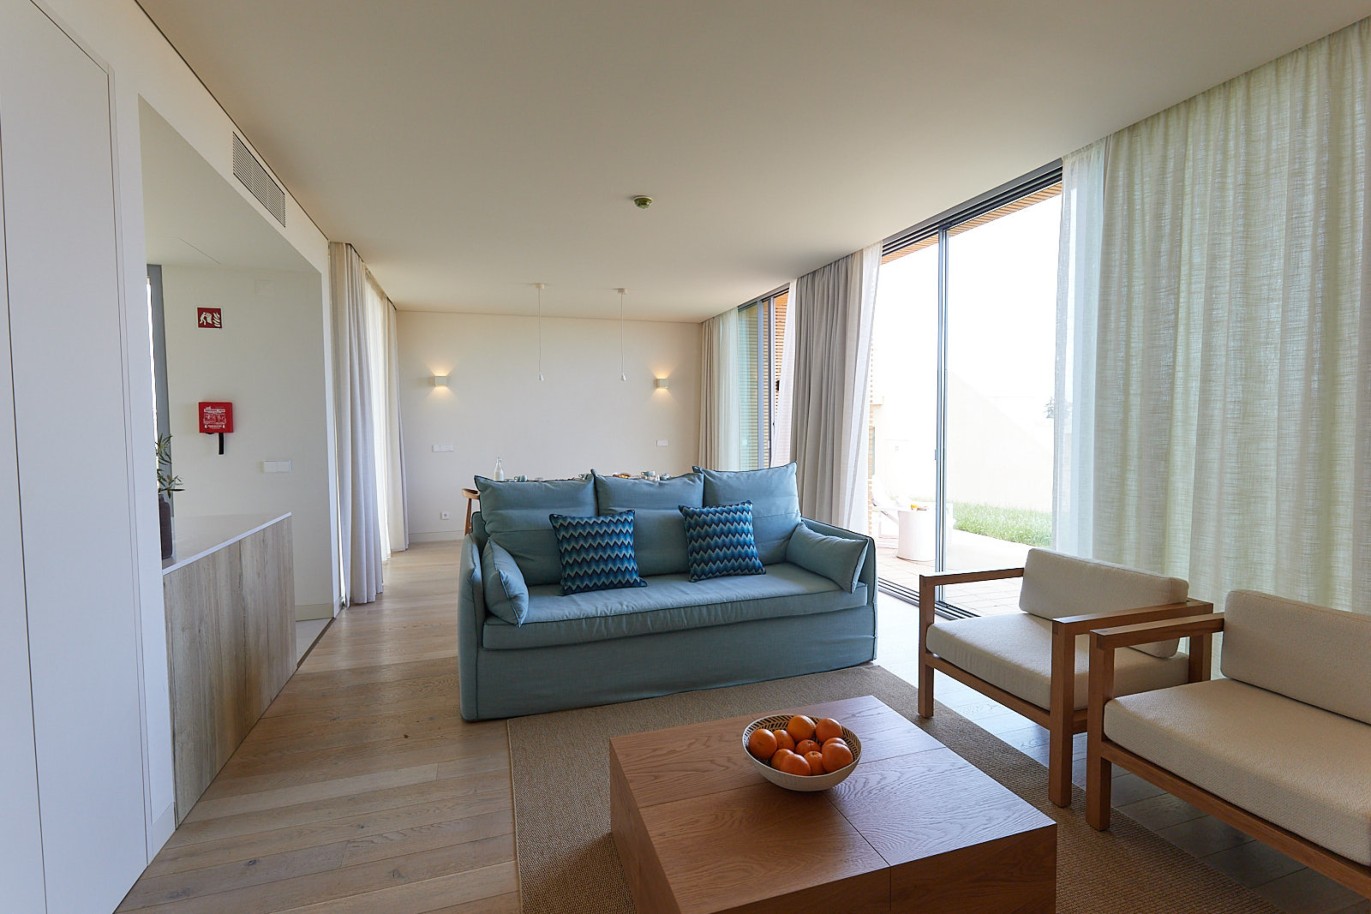 2 bedroom apartment in resort, for sale in Porches, Algarve_230593